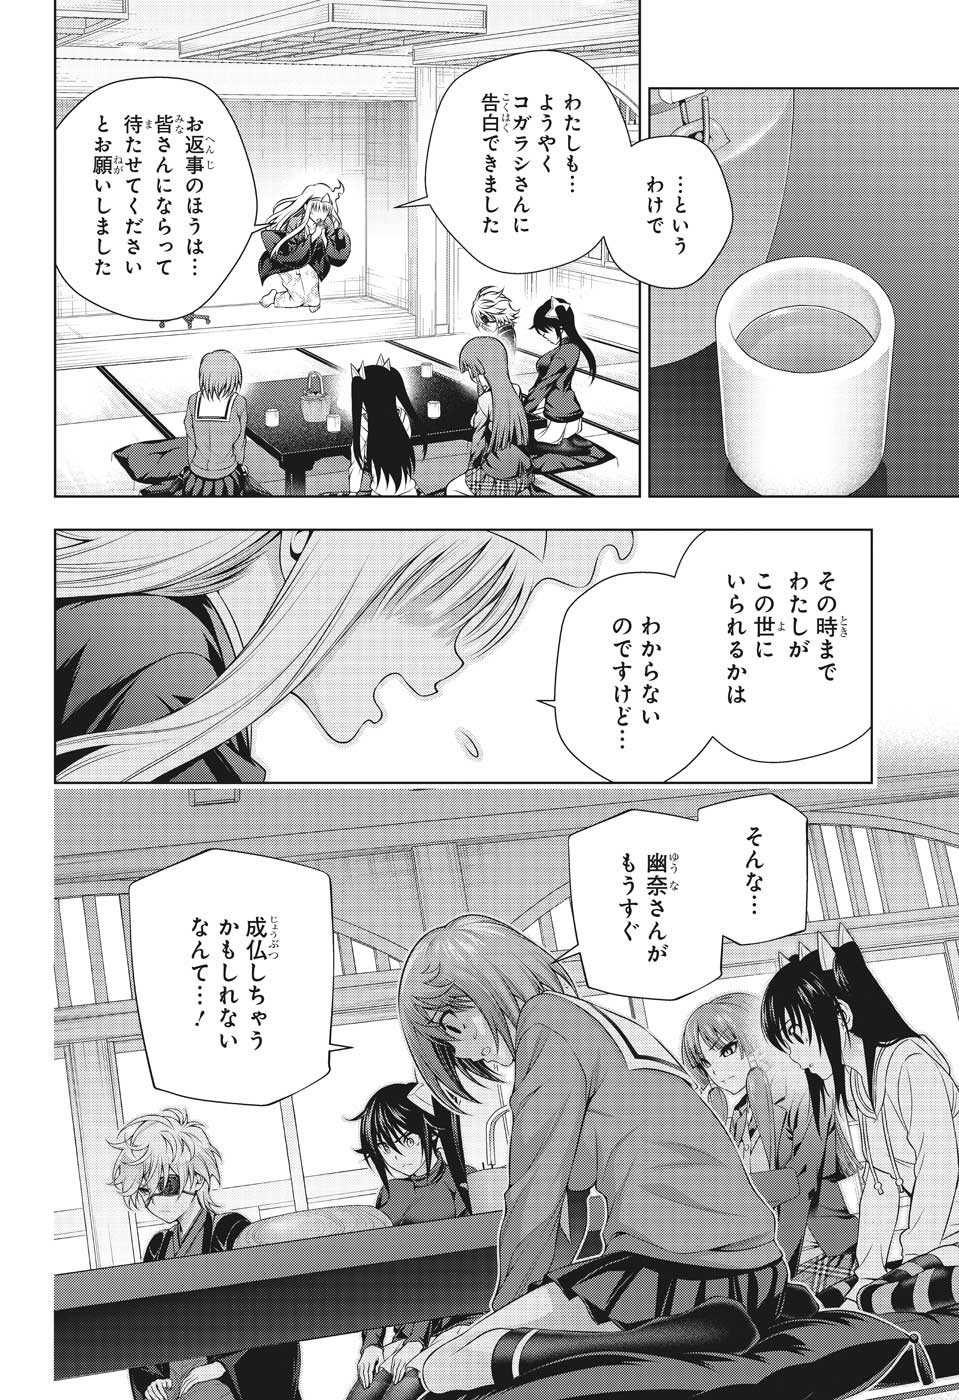 Yuragi-sou no Yuuna-san - ゆらぎ荘の幽奈さん - Chapter 195 - Page 2